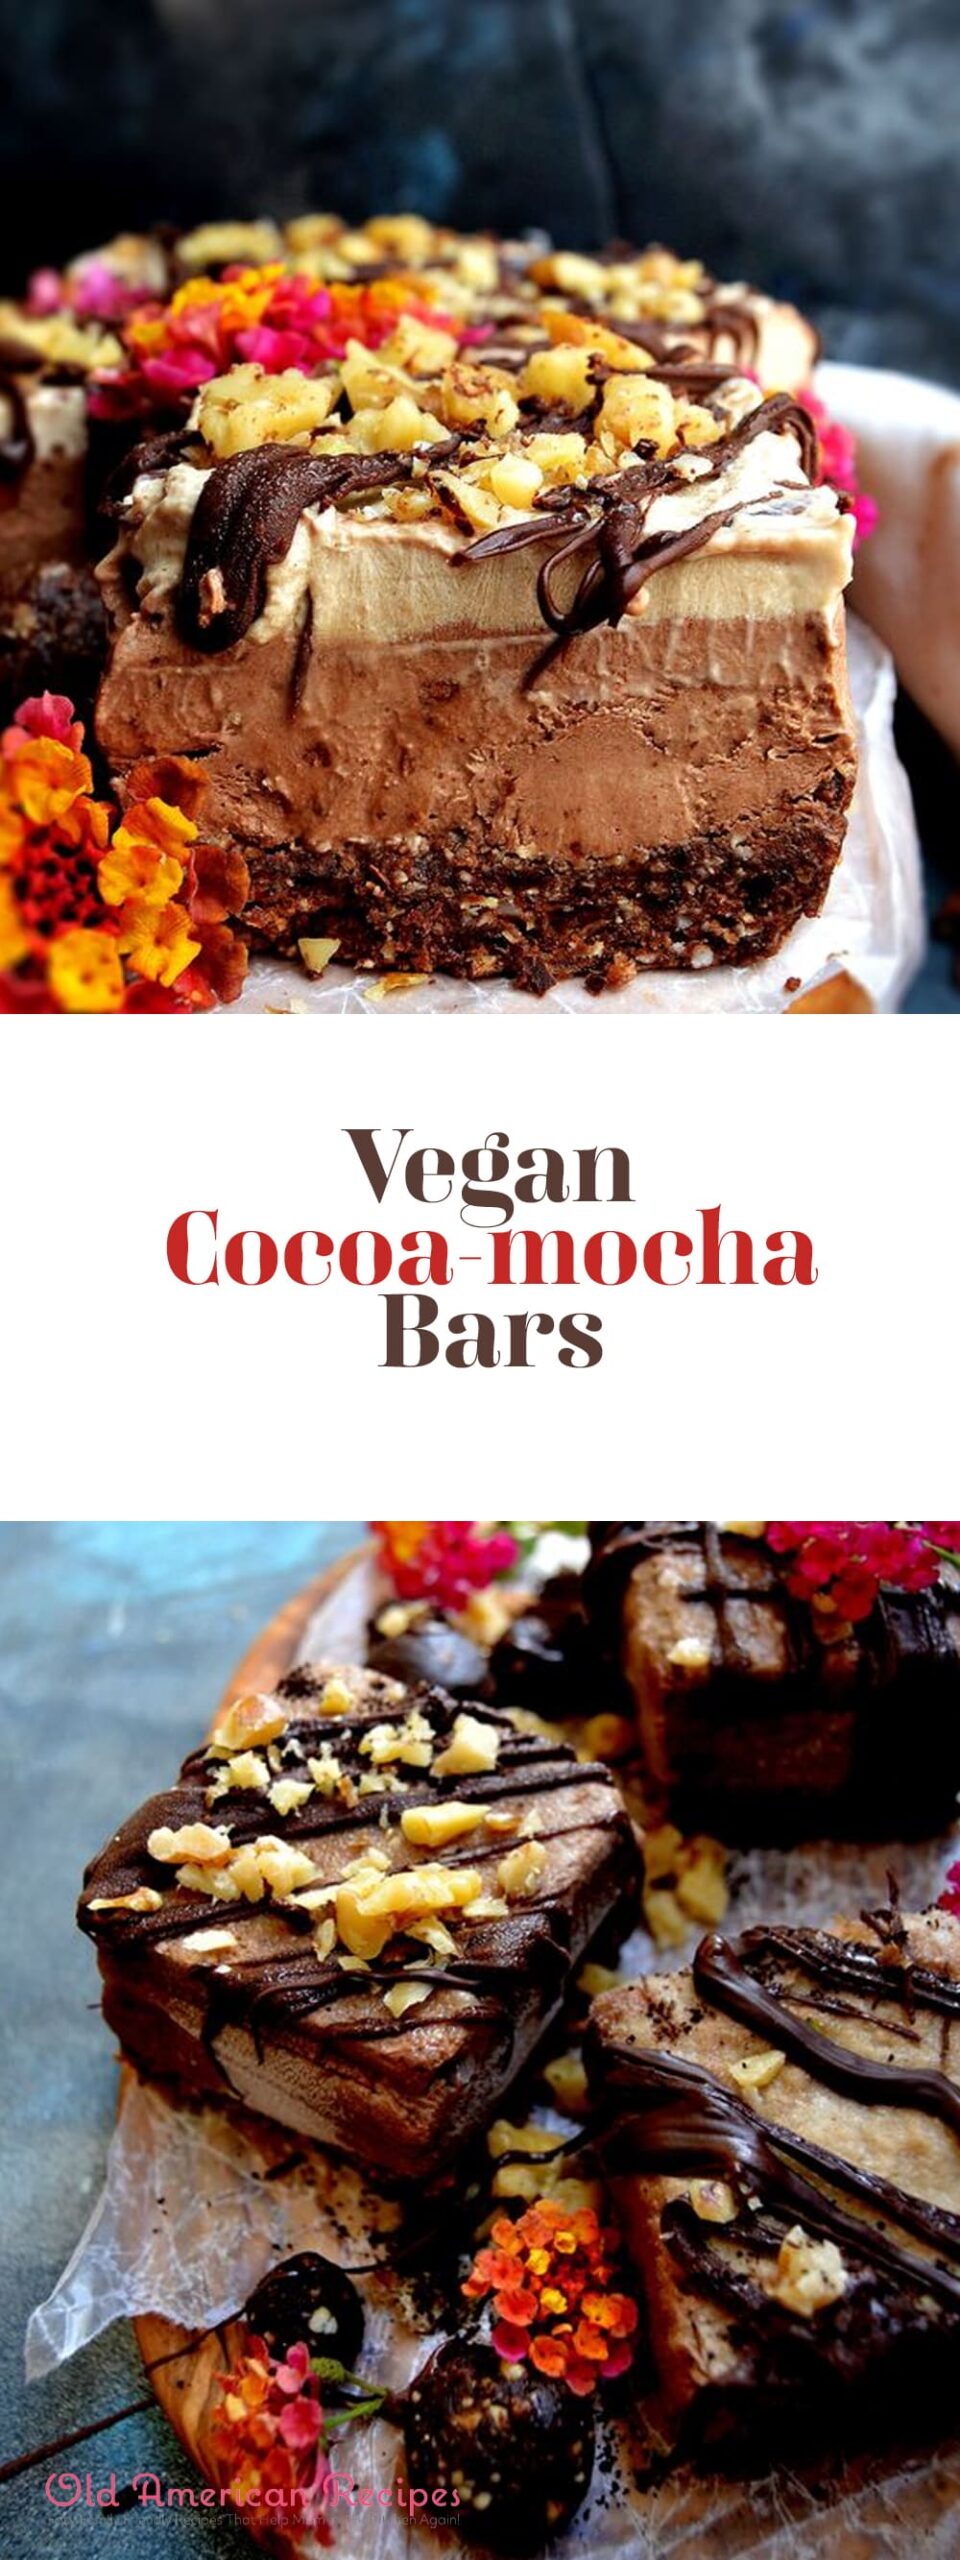 Vegan Cocoa-Mocha Bars